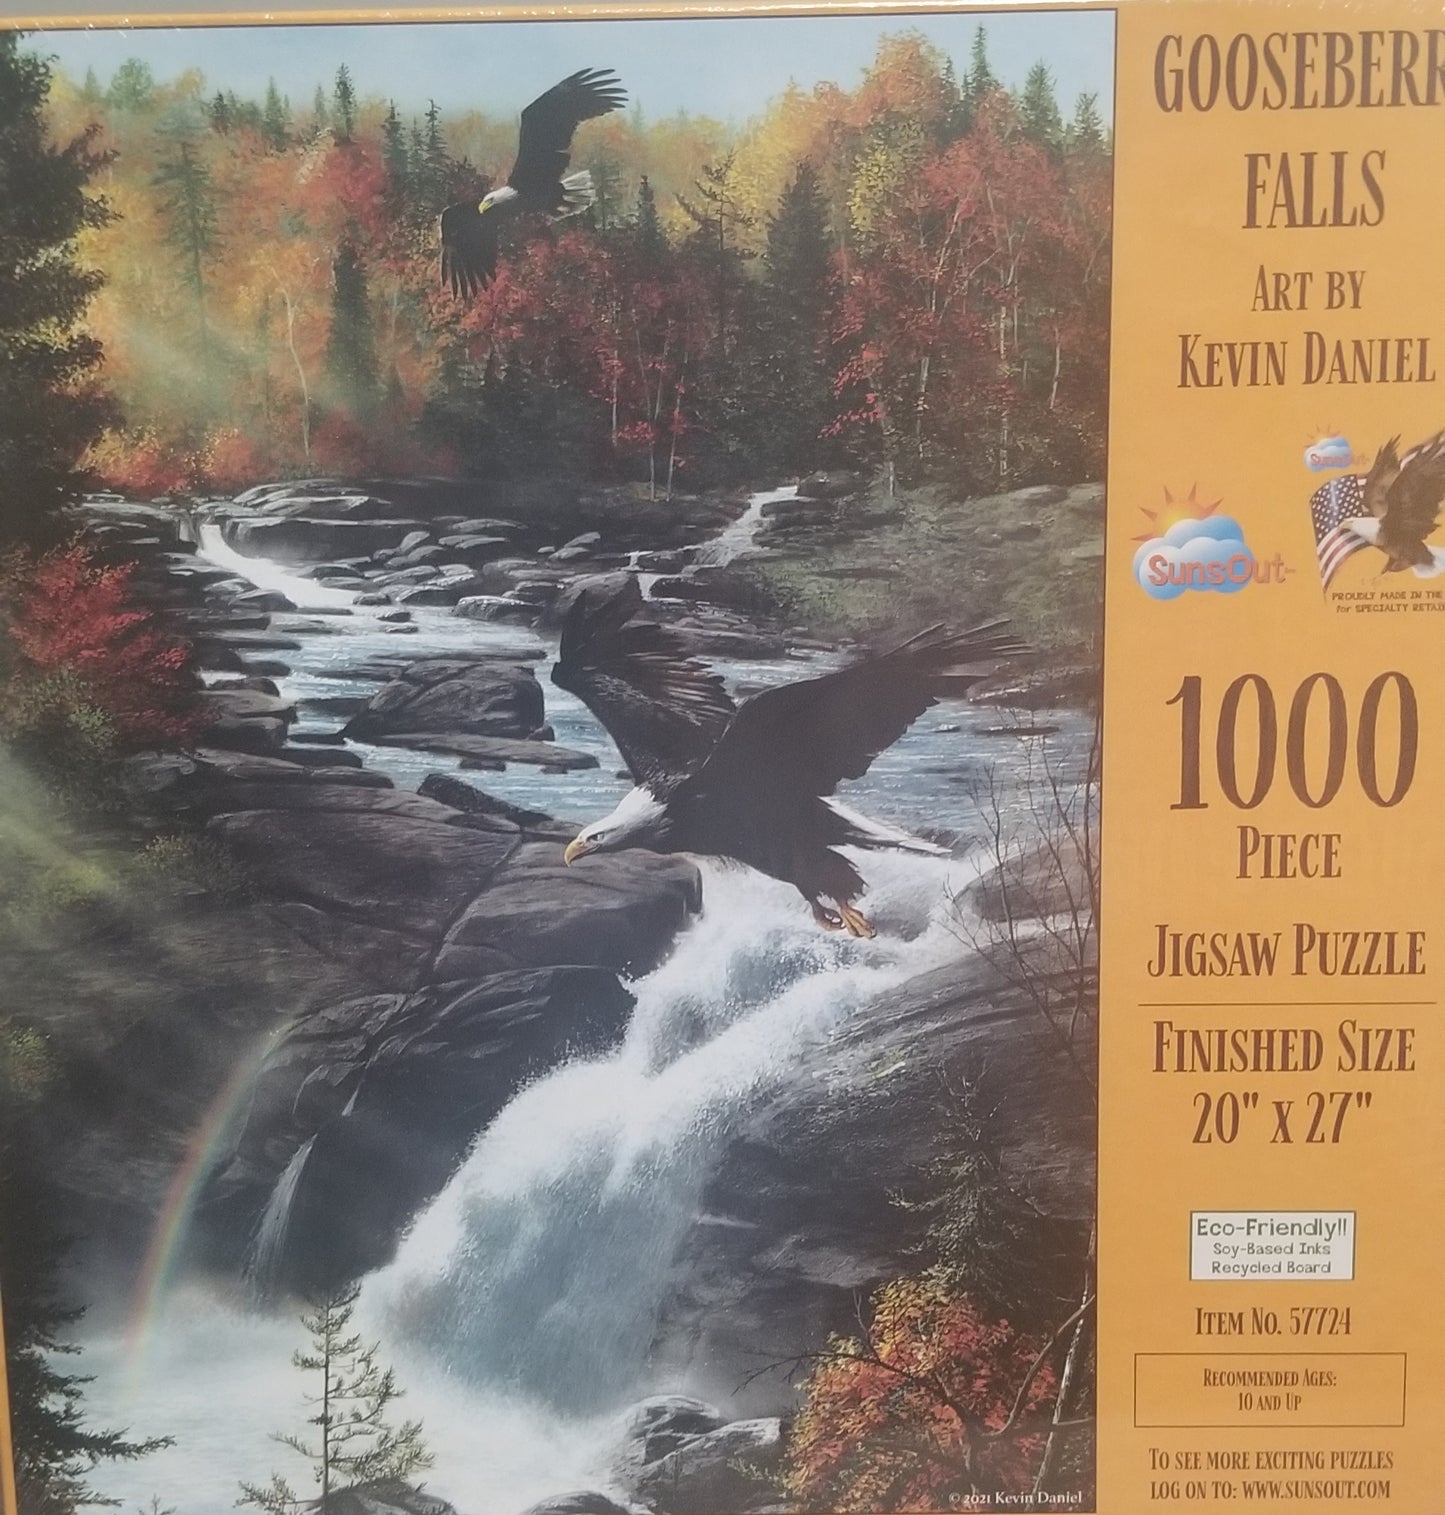 Gooseberry Falls by Kevin Daniel, 1000 Piece Puzzle